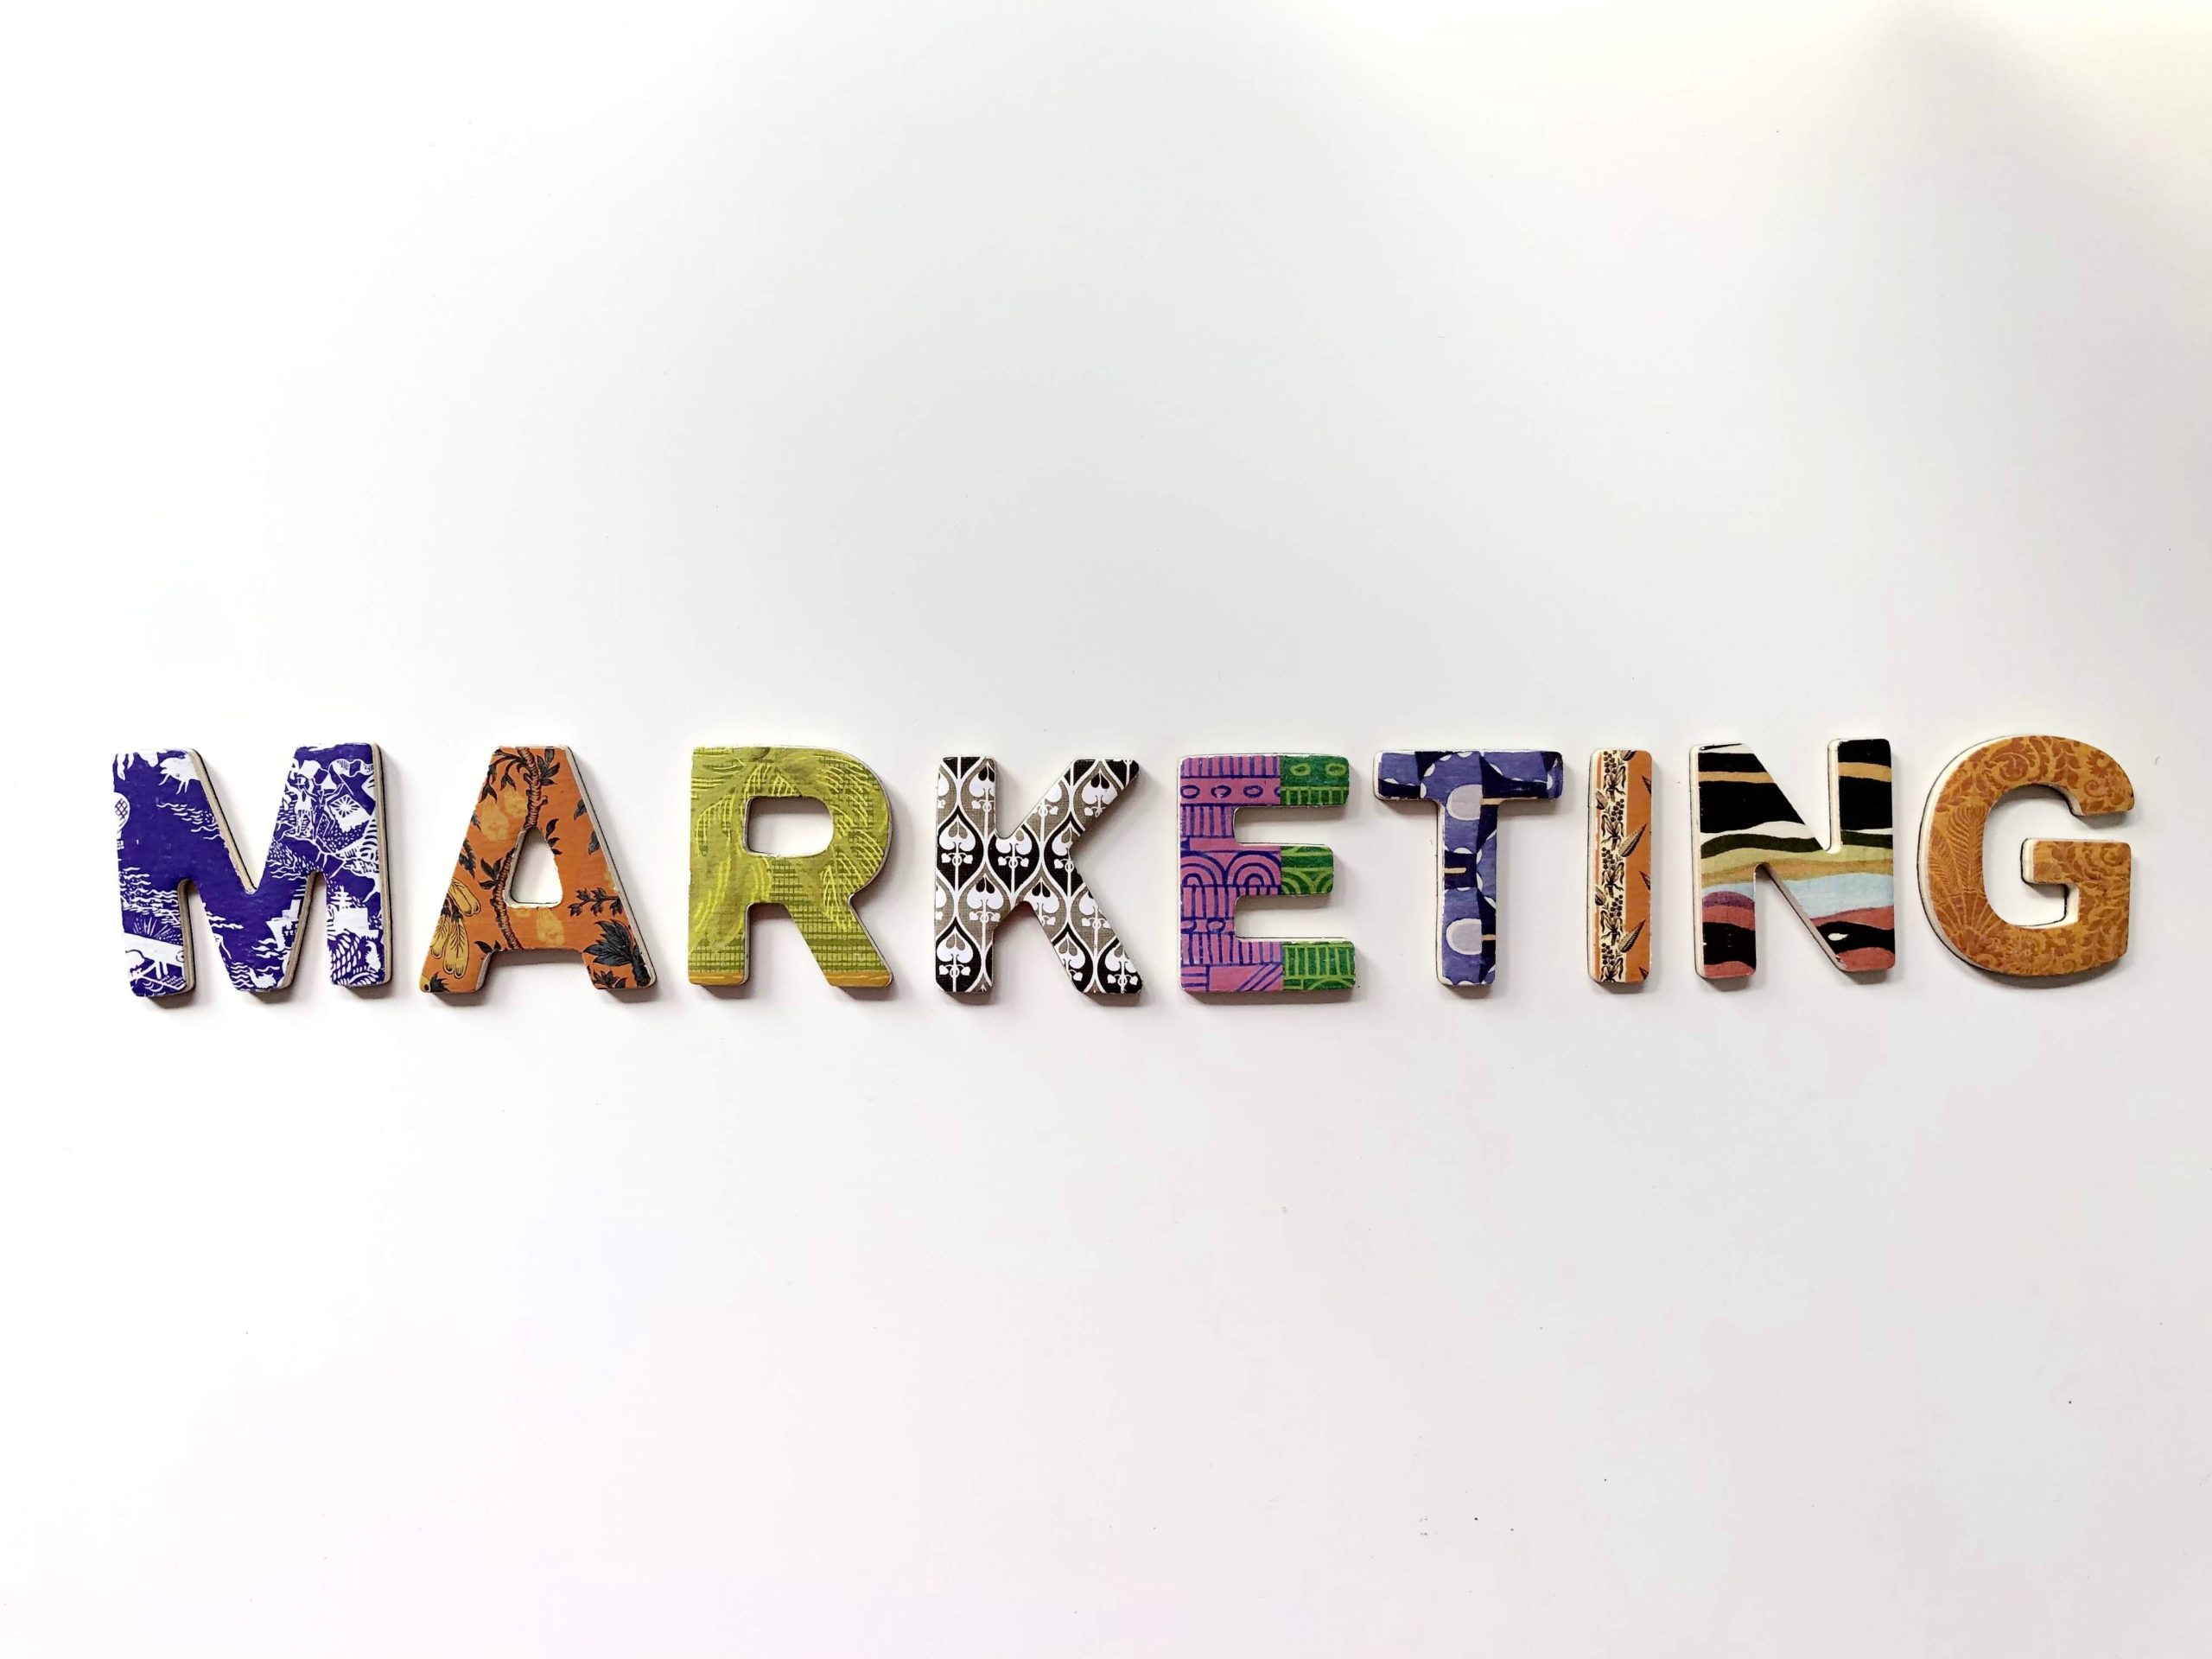 Digital marketing banner